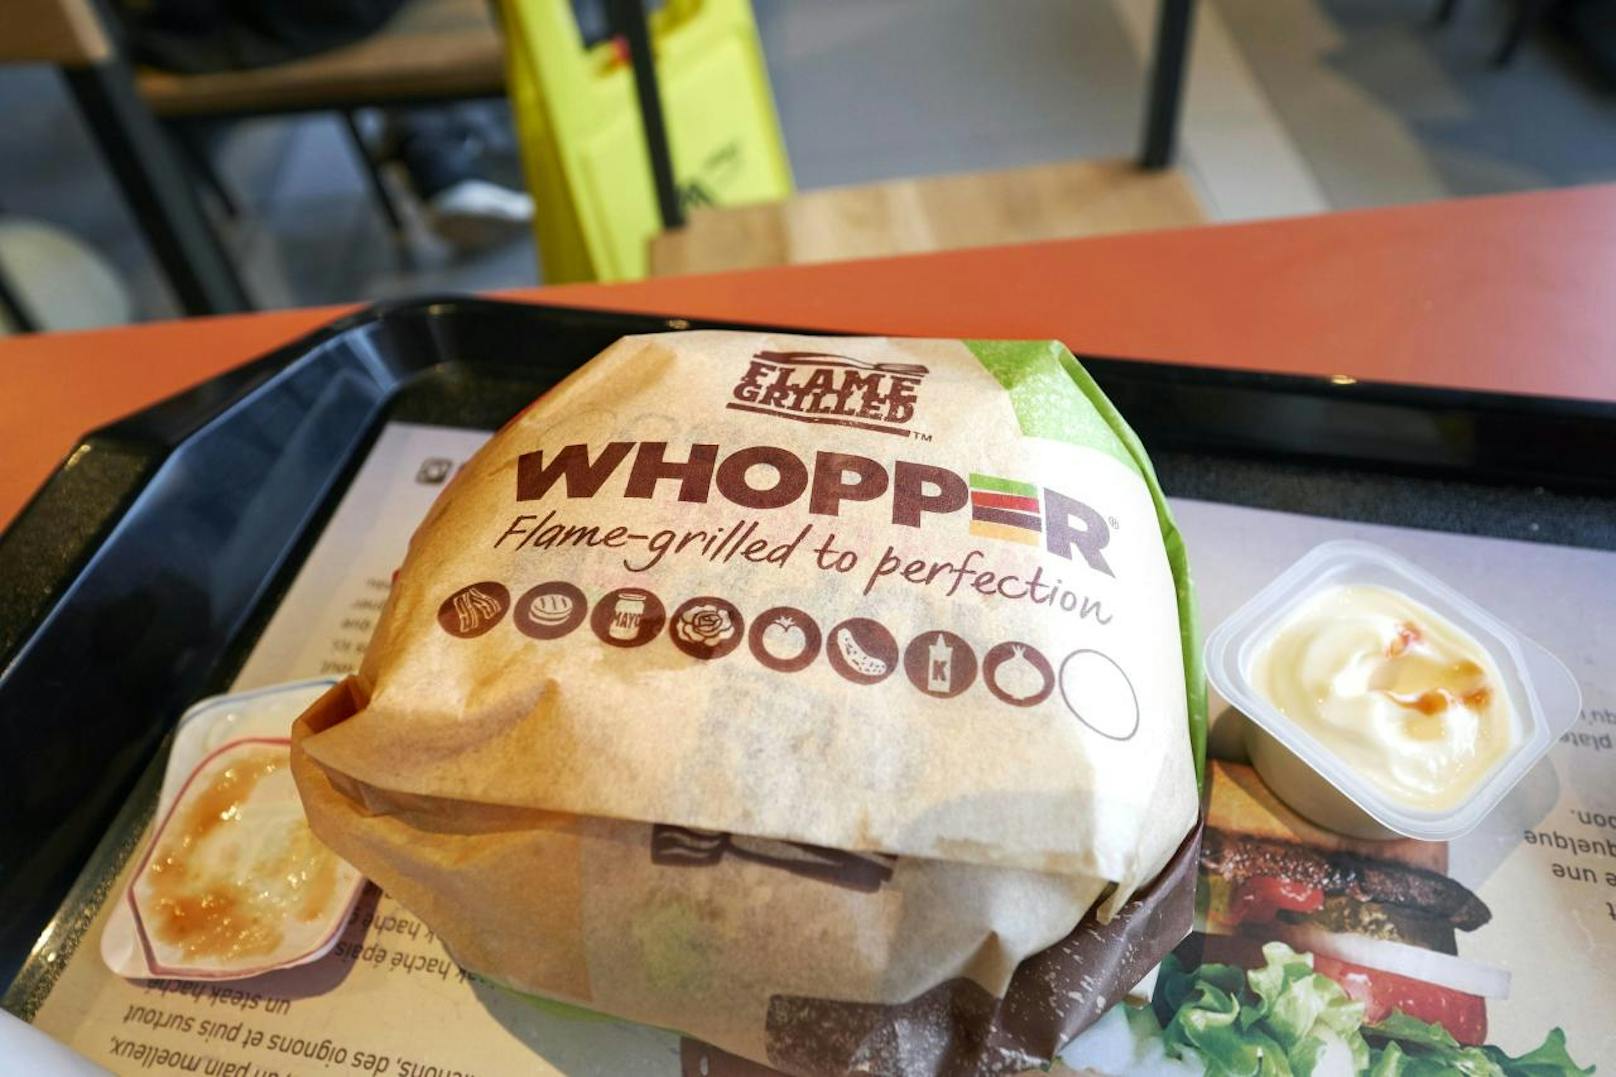 Burger King nennt die Aktion "Whopper Detour" (deutsch: "Whopper-Umweg").